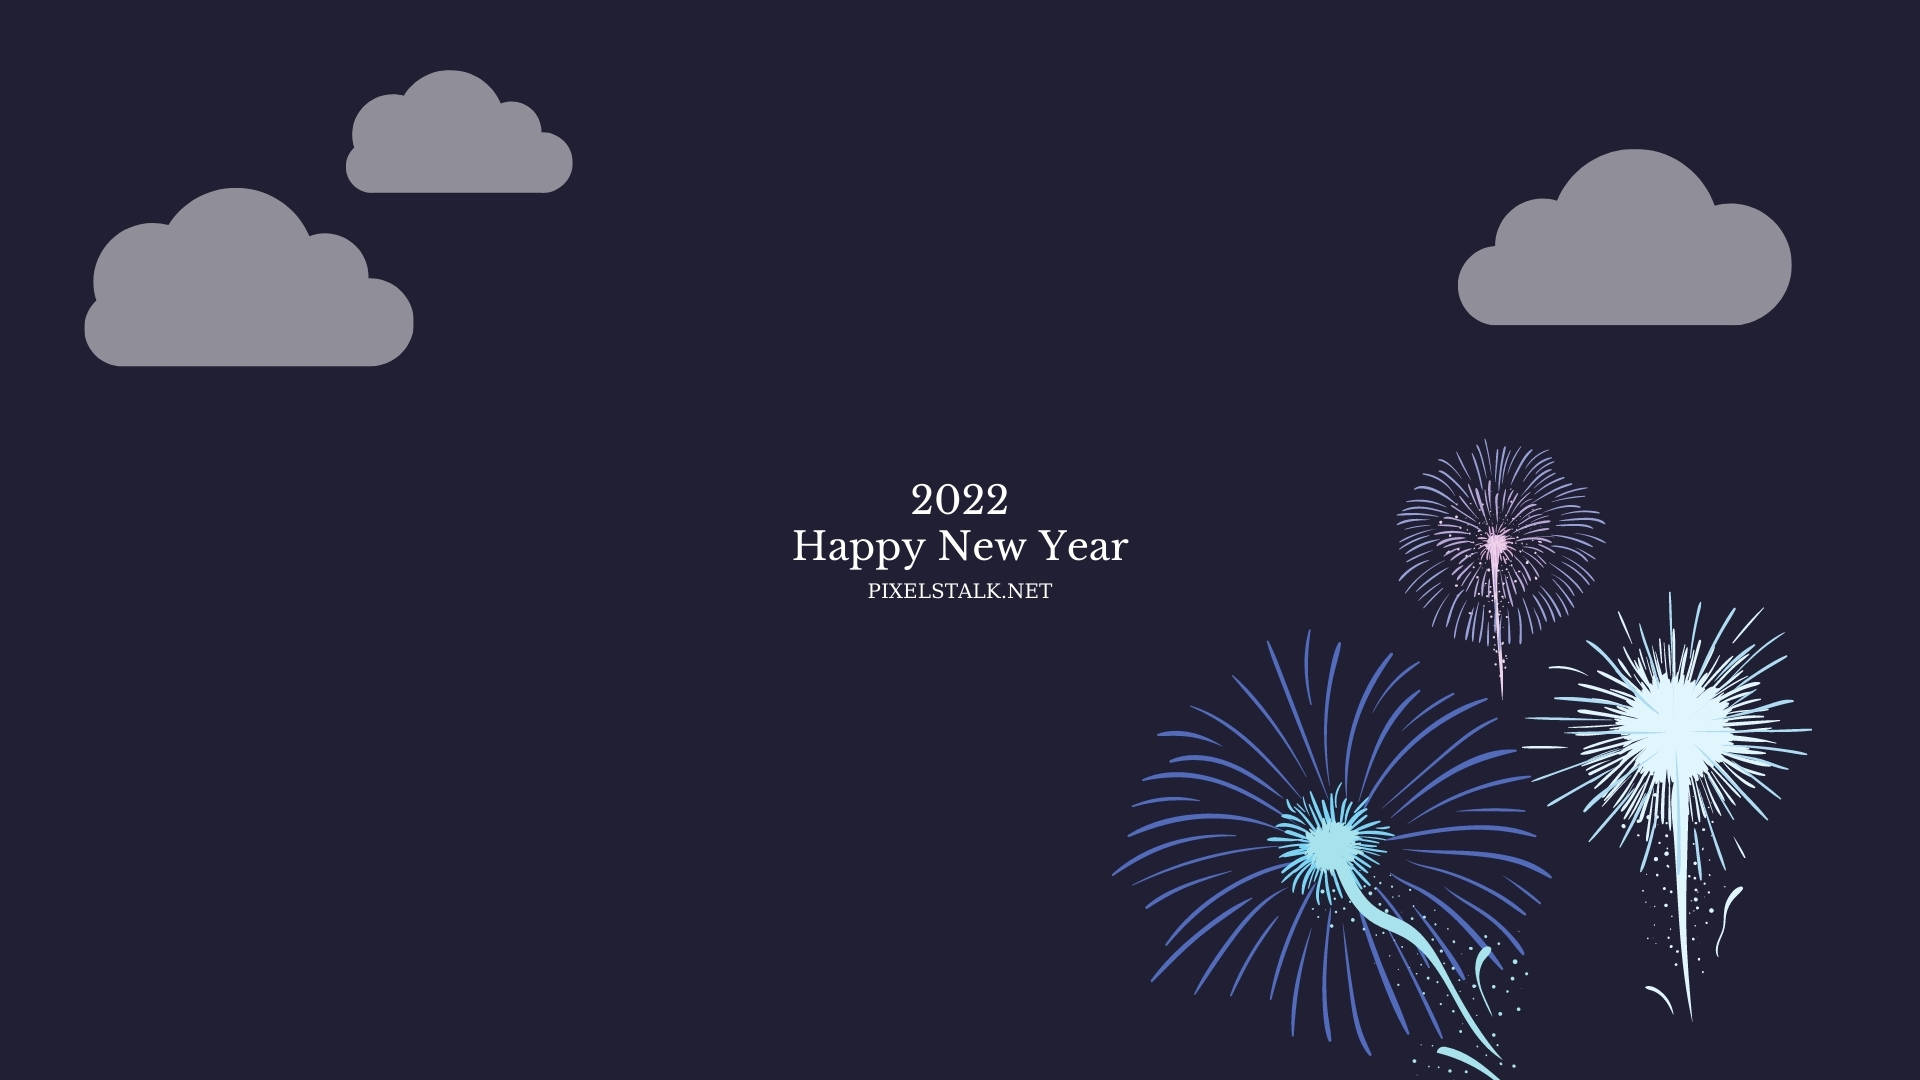 New Year 2022 Minimalist Greetings